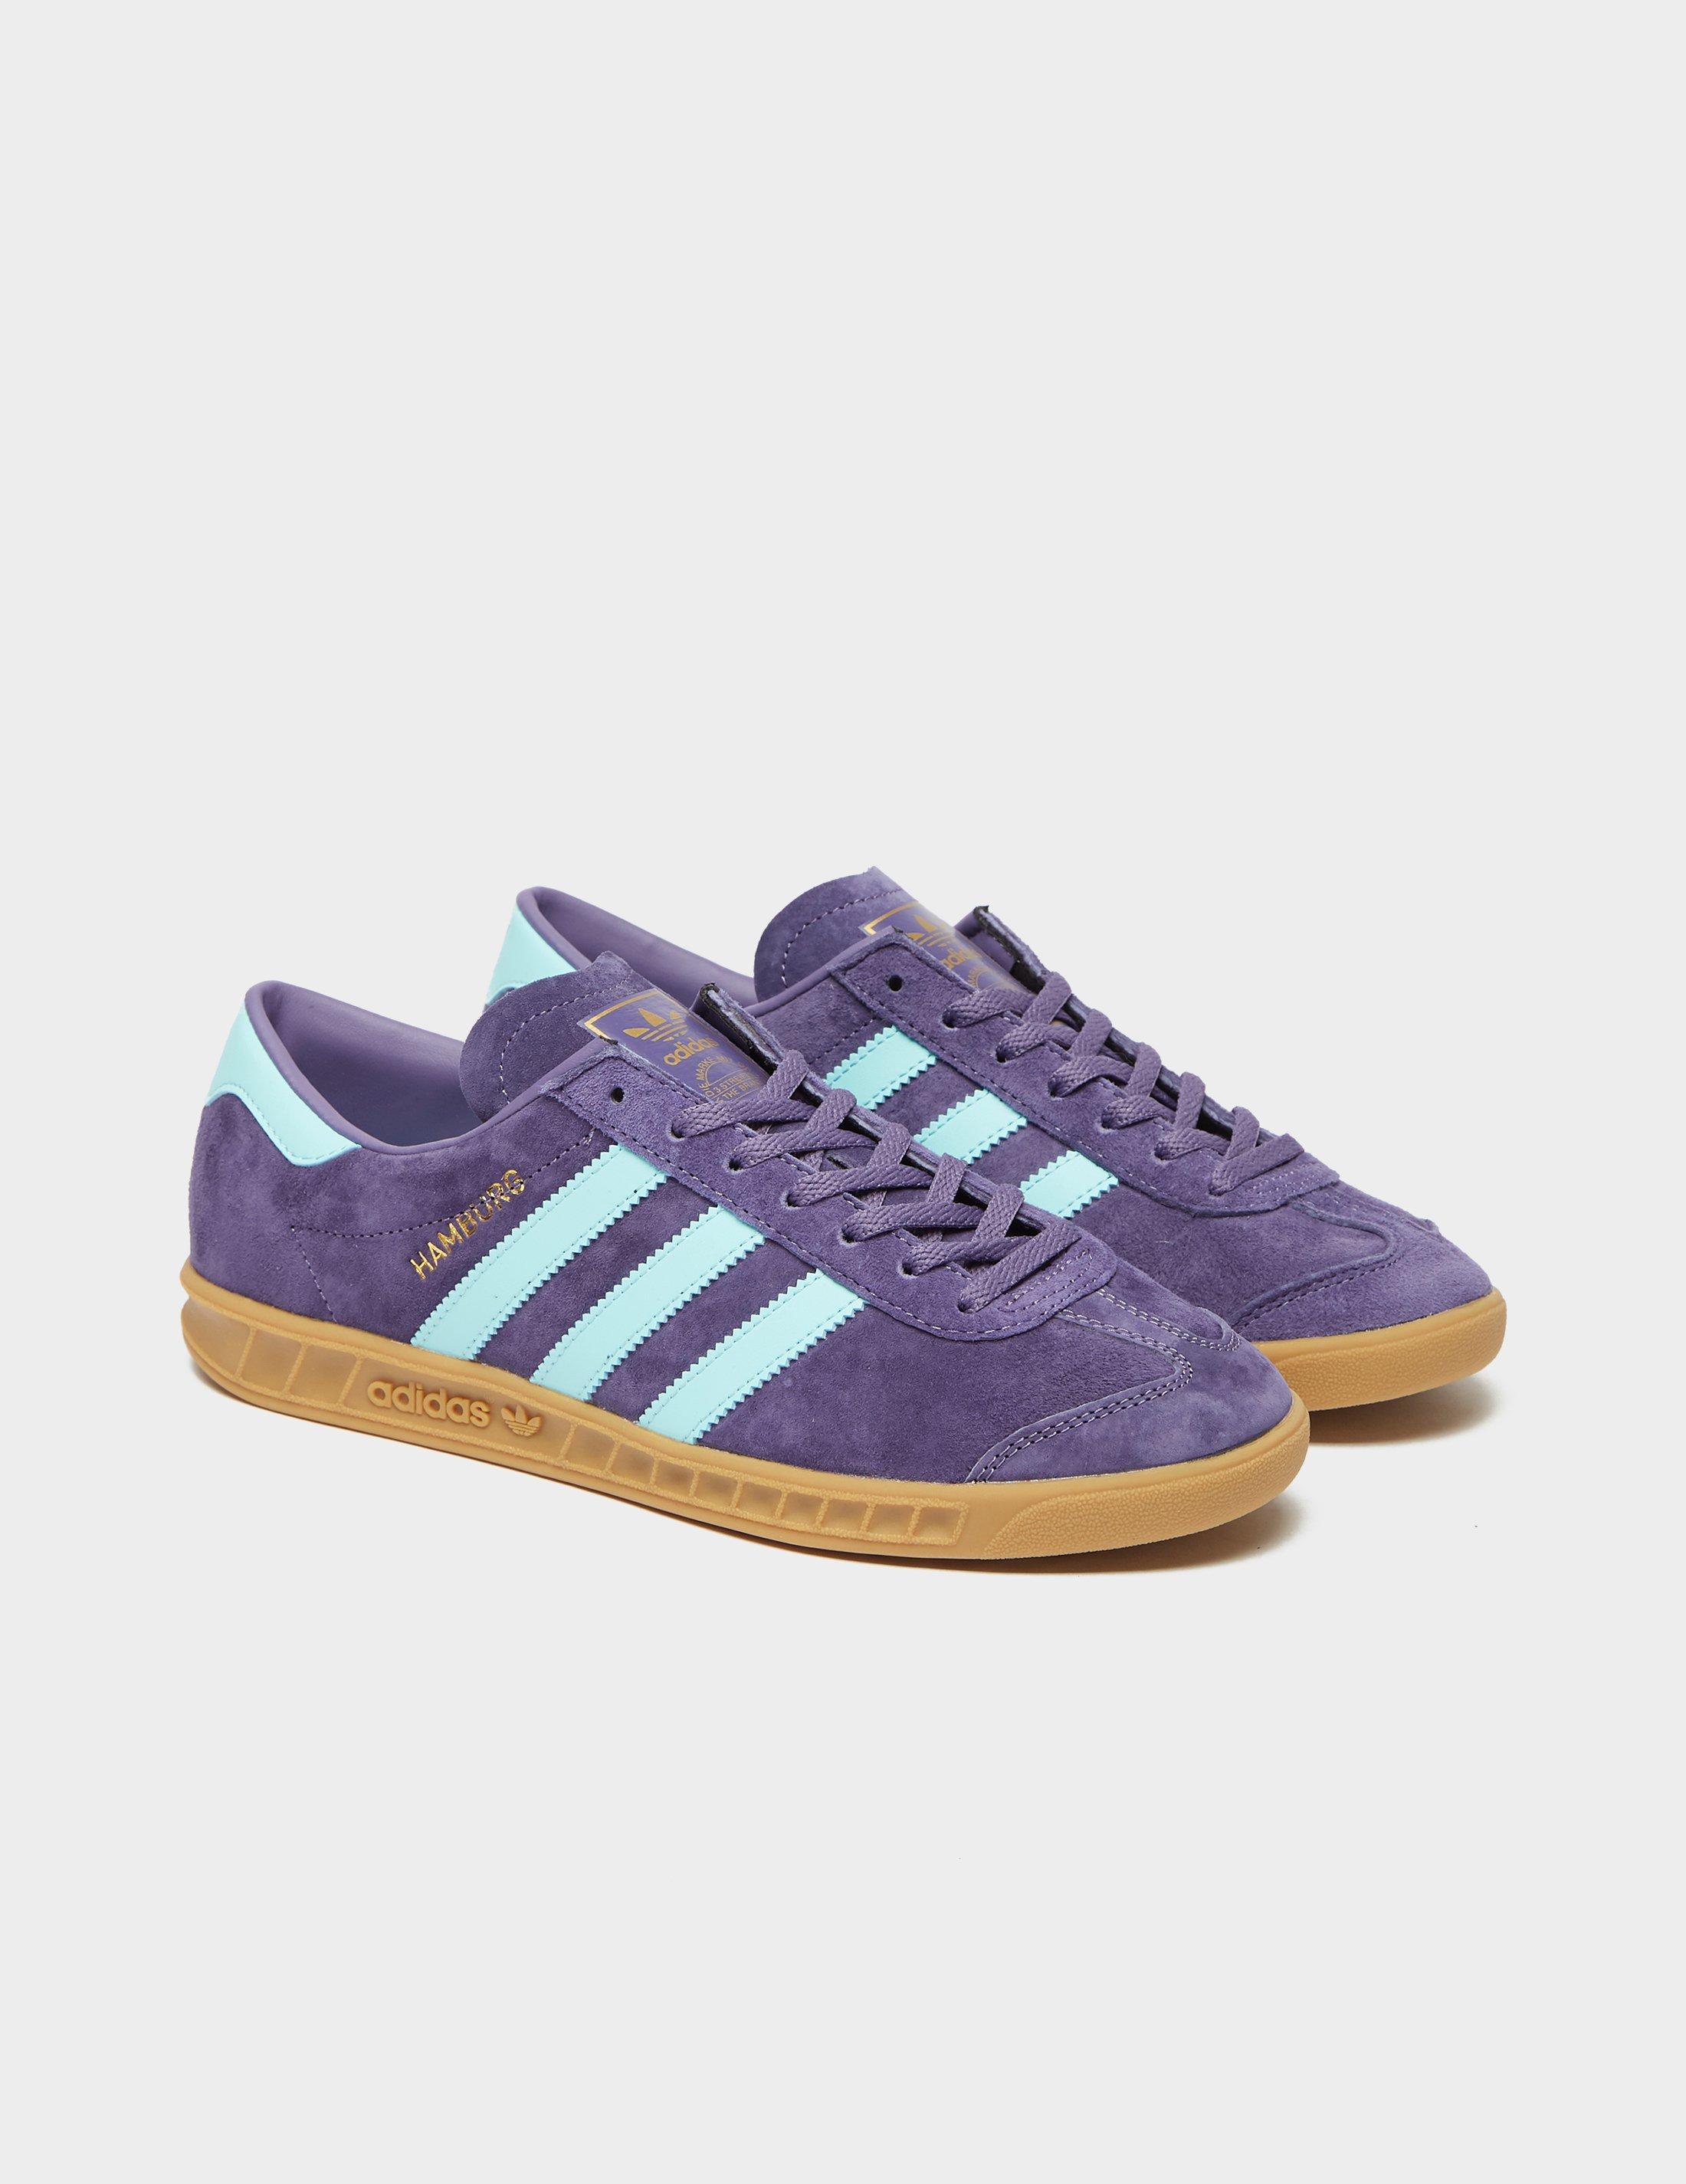 adidas Originals Suede Hamburg Purple/blue for Men - Lyst